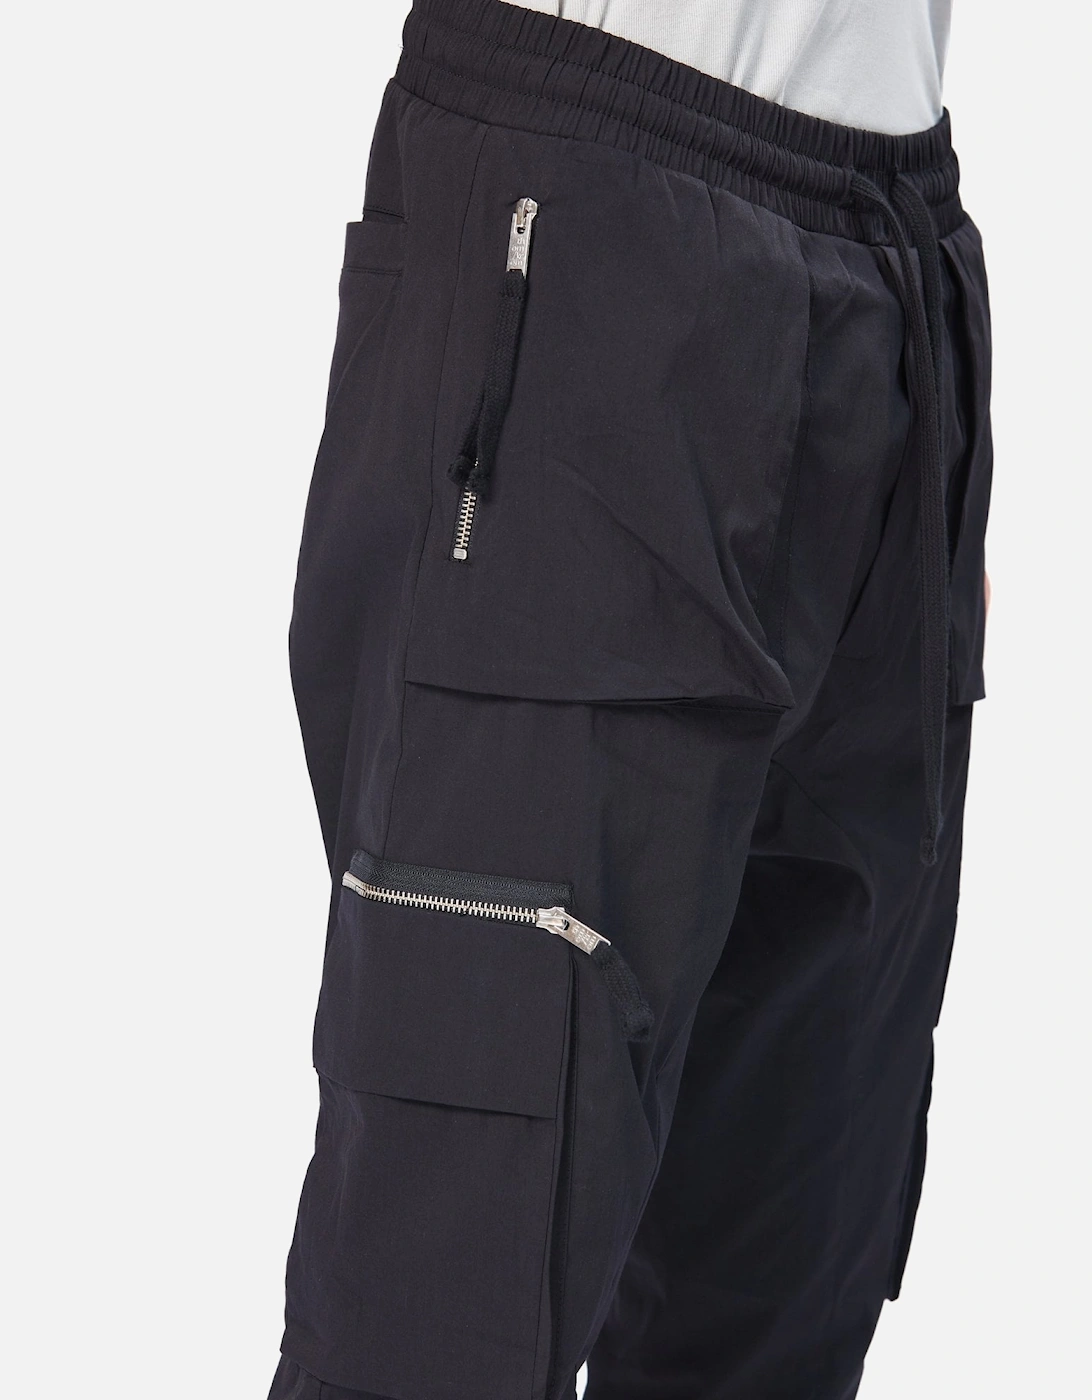 Zip Pocket Cuffed Black Trouser